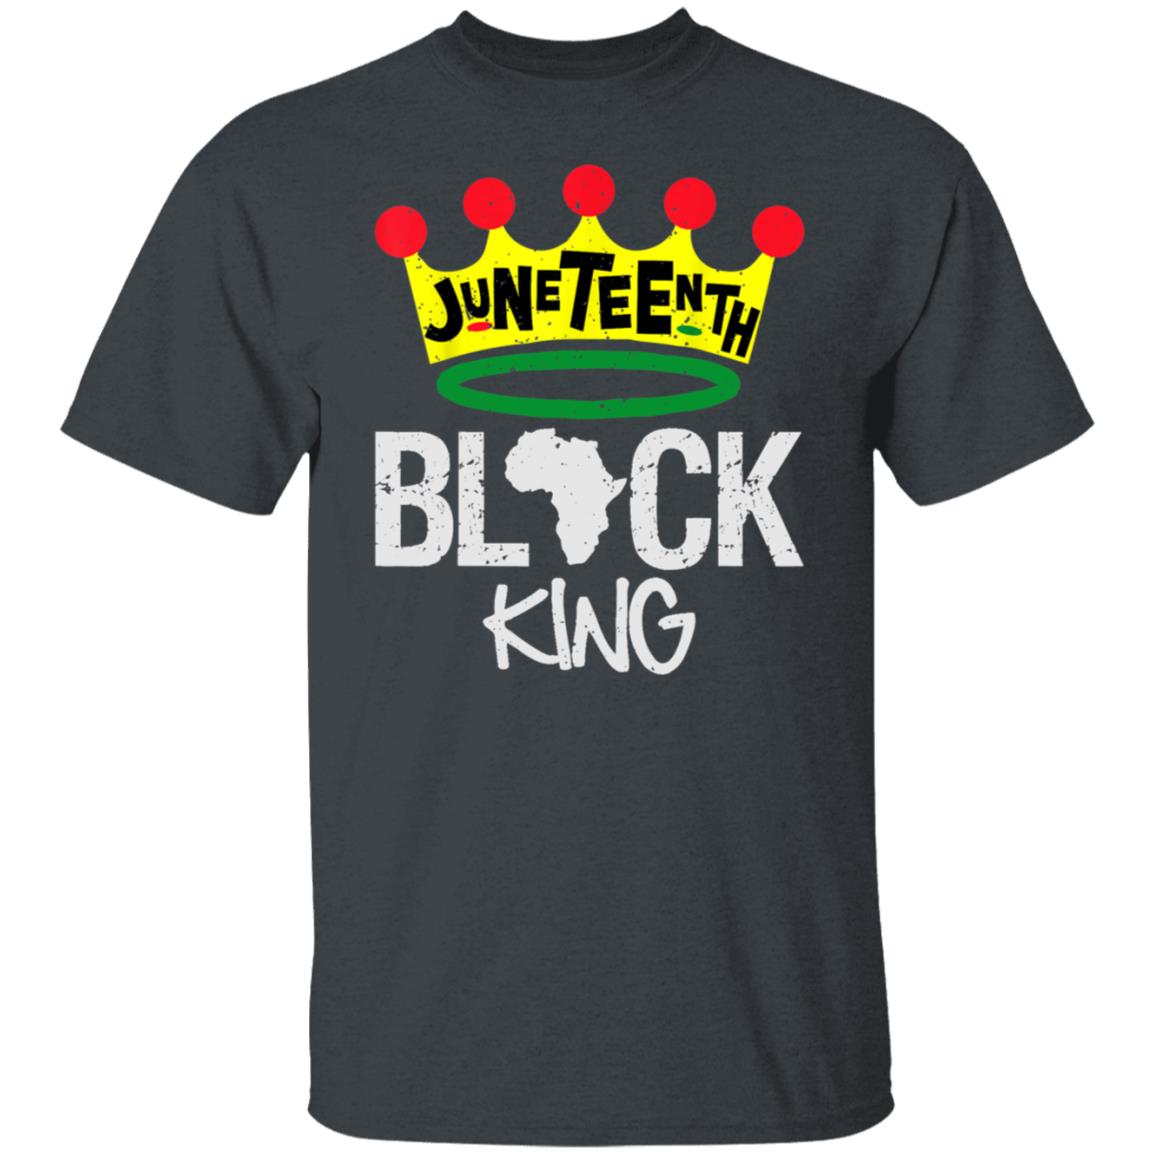 Juneteenth Black King Black Power Black History Month T-Shirt